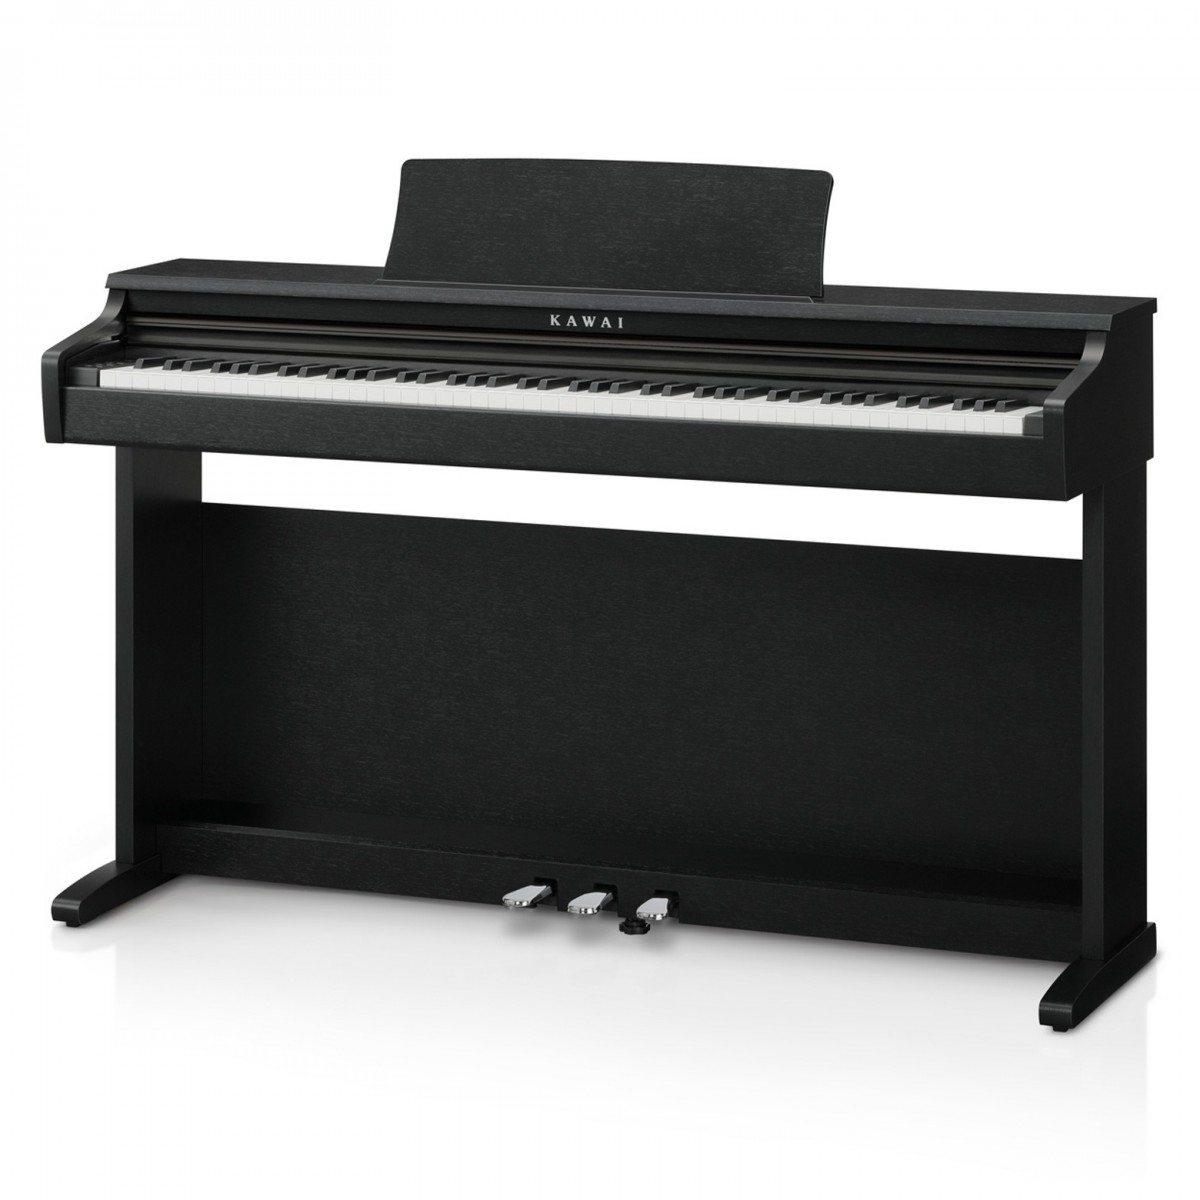 KAWAI KDP120 BLACK SATIN PIANOFORTE DIGITALE 88 TASTI PESATI USB MIDI E BLUETOOTH MIDI 5